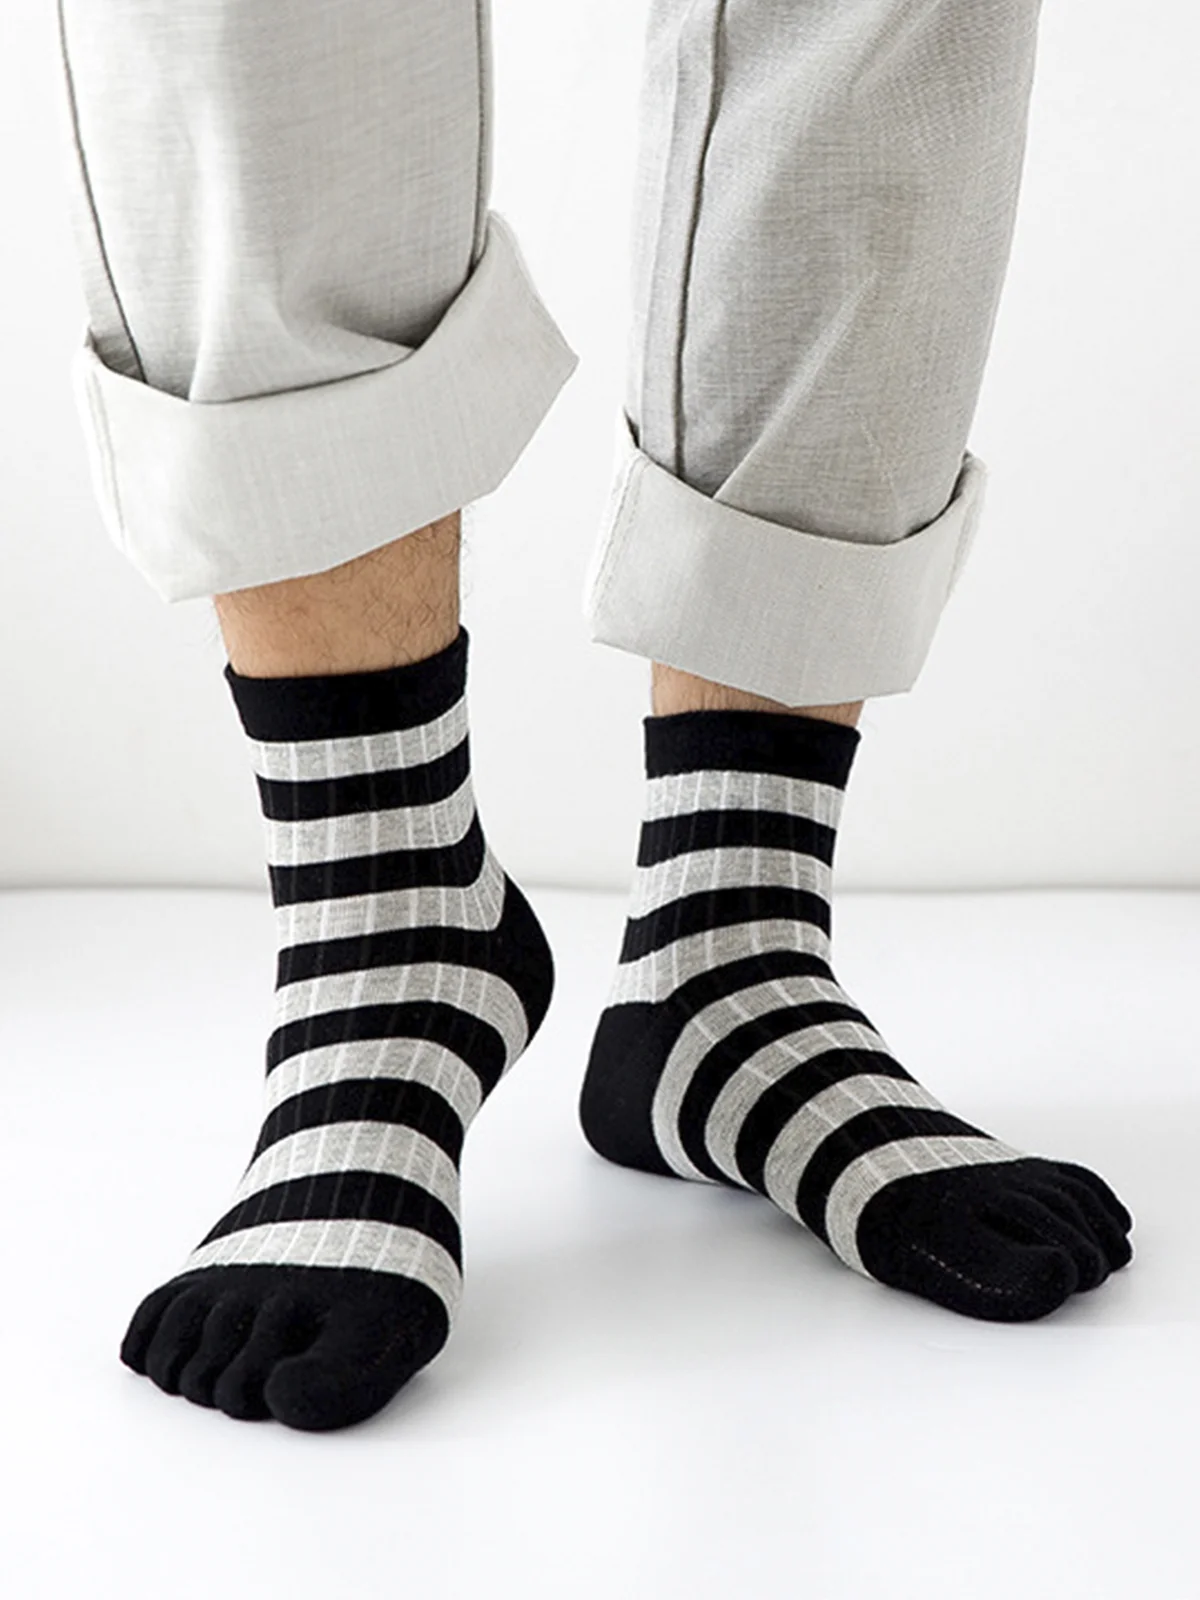 Royaura Men's Deodorant Elastic Indoor and Outdoor Toe Socks